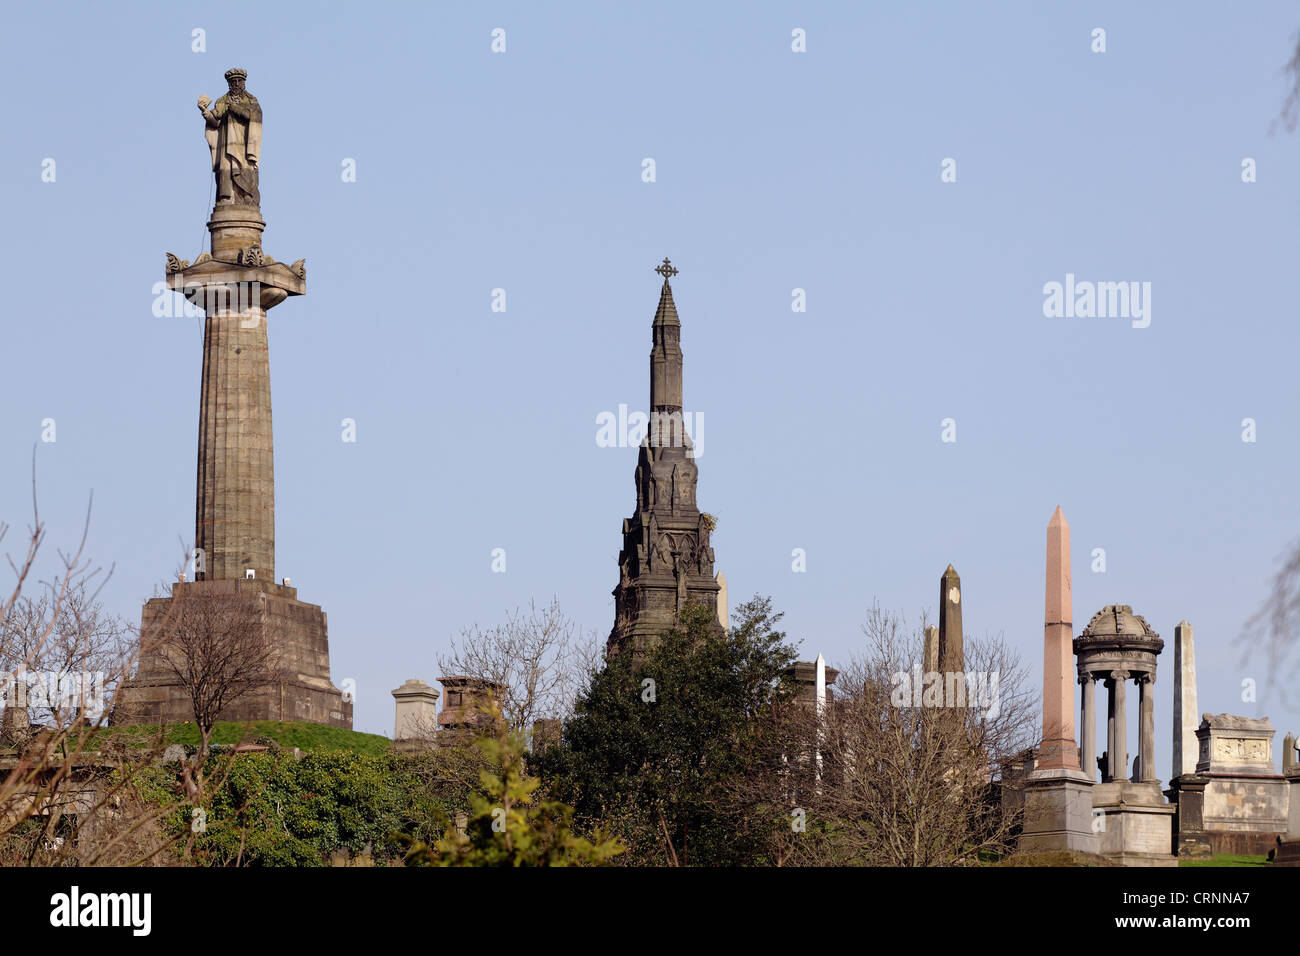 John Knox statue, on the left, Scottish Protestant Reformer, Glasgow Necropolis, Scotland, UK Stock Photo